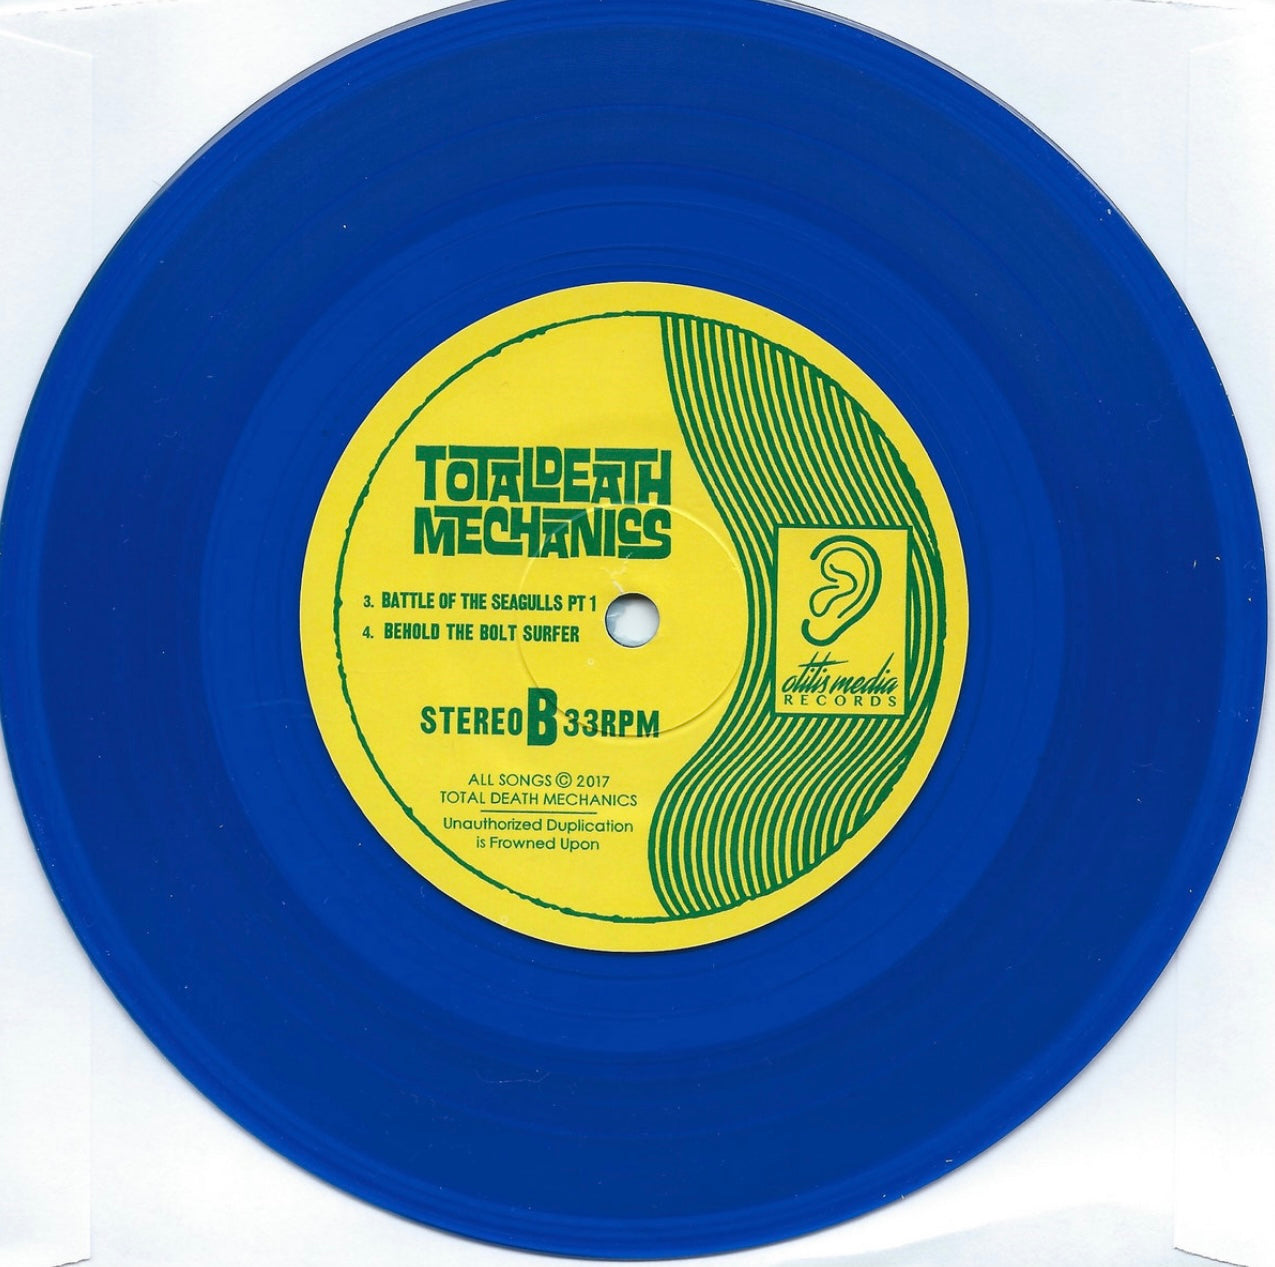 OMR-001 Total Death Mechanics “The Nasty Pterodactyl” 7 inch EP (Blue Vinyl)